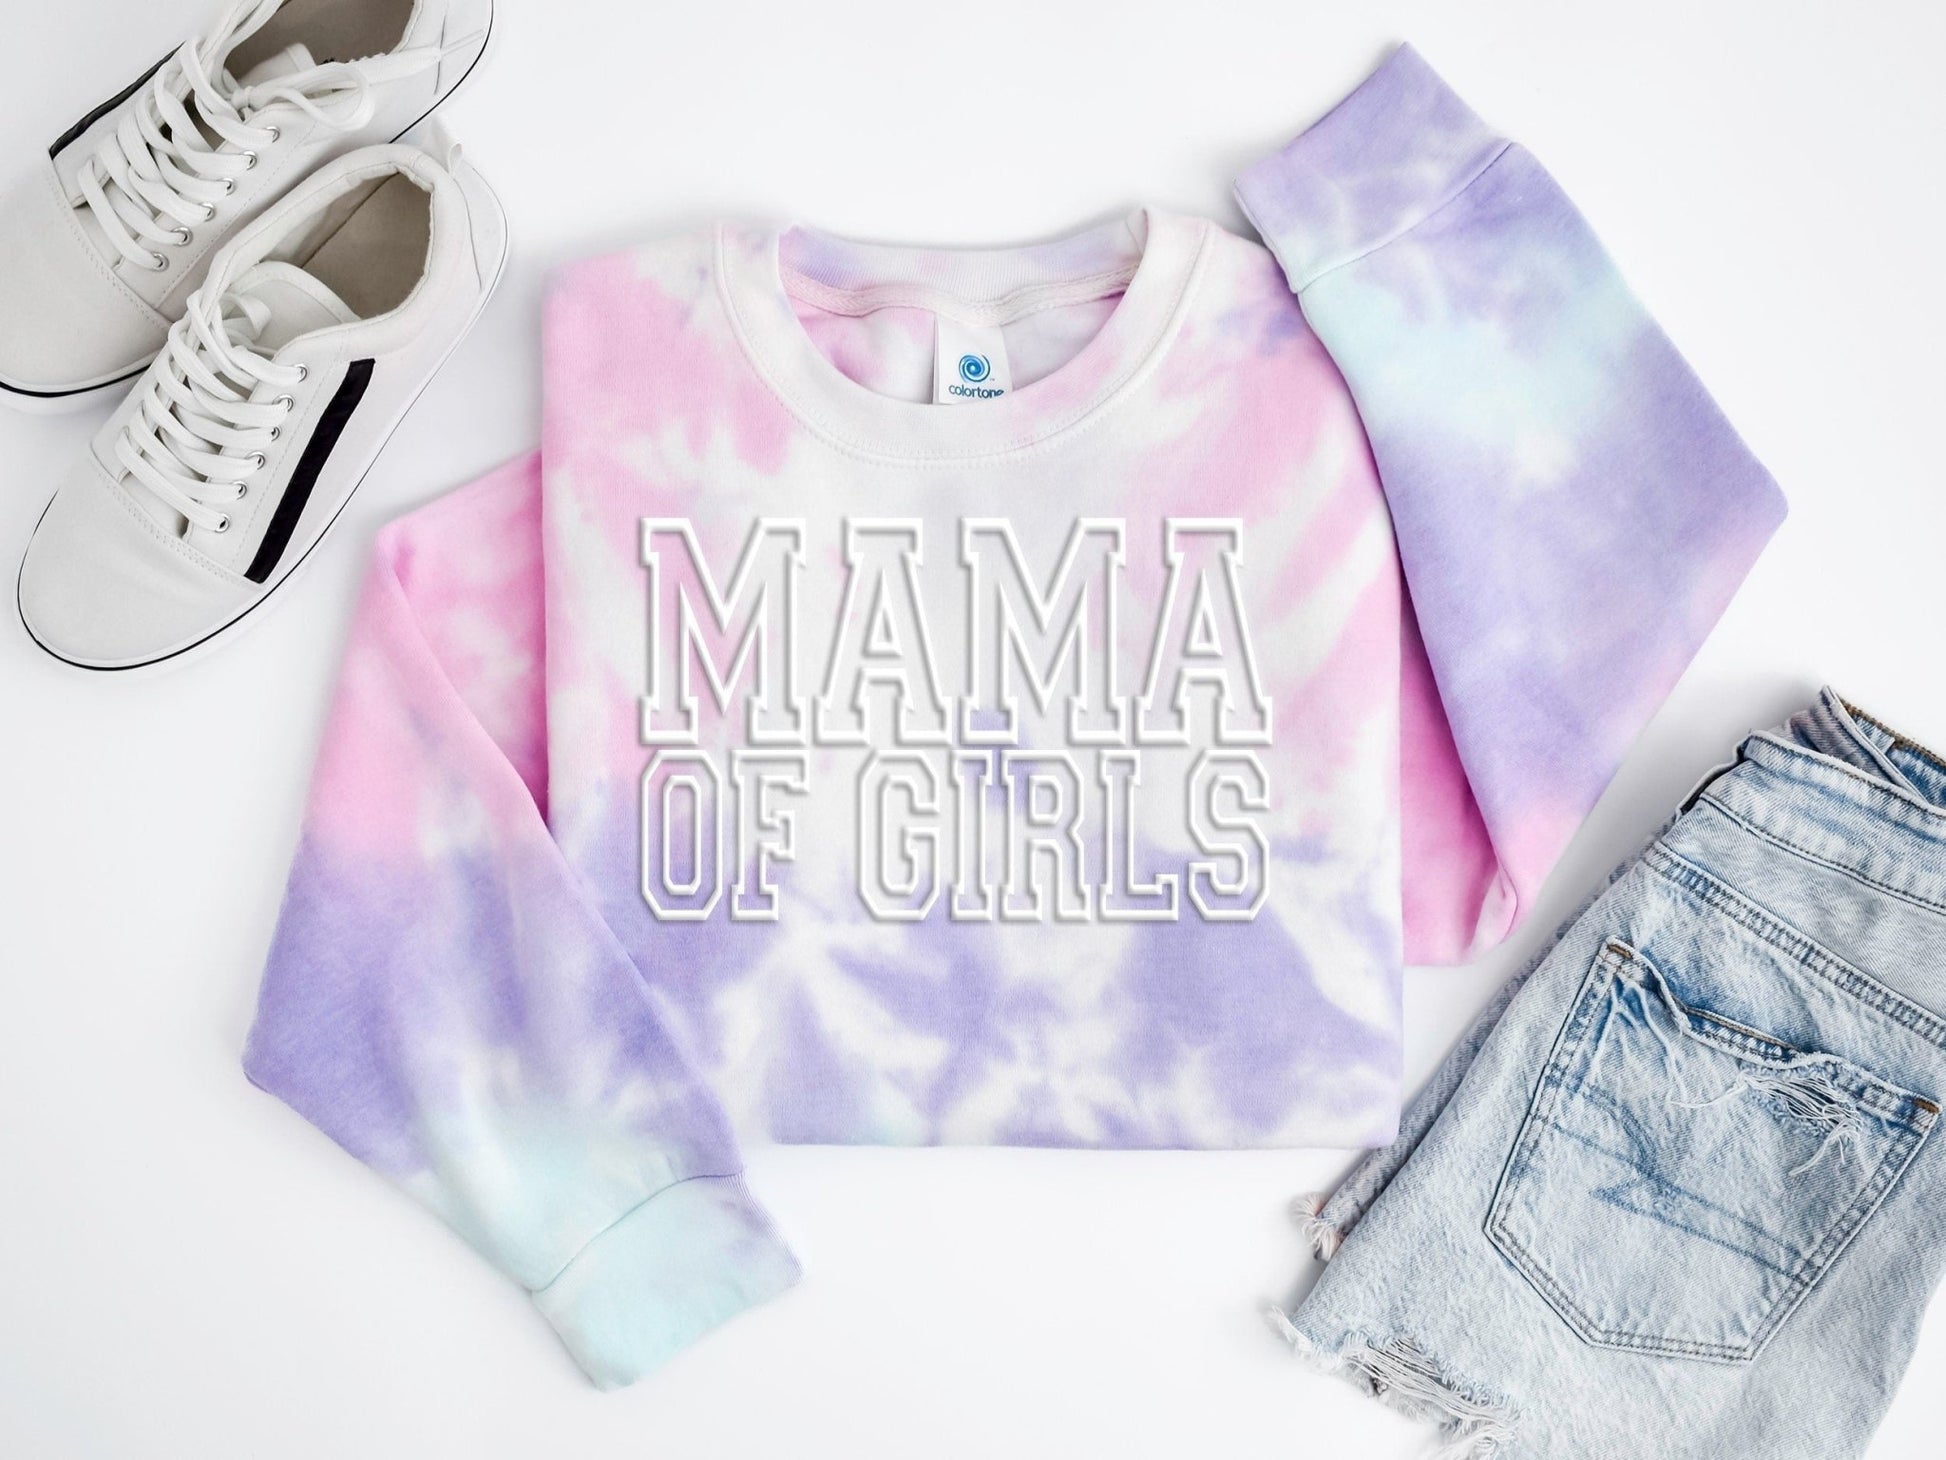 Mama Life Tie Dye Sweatshirt Gift for Mothers Day - Squishy Cheeks